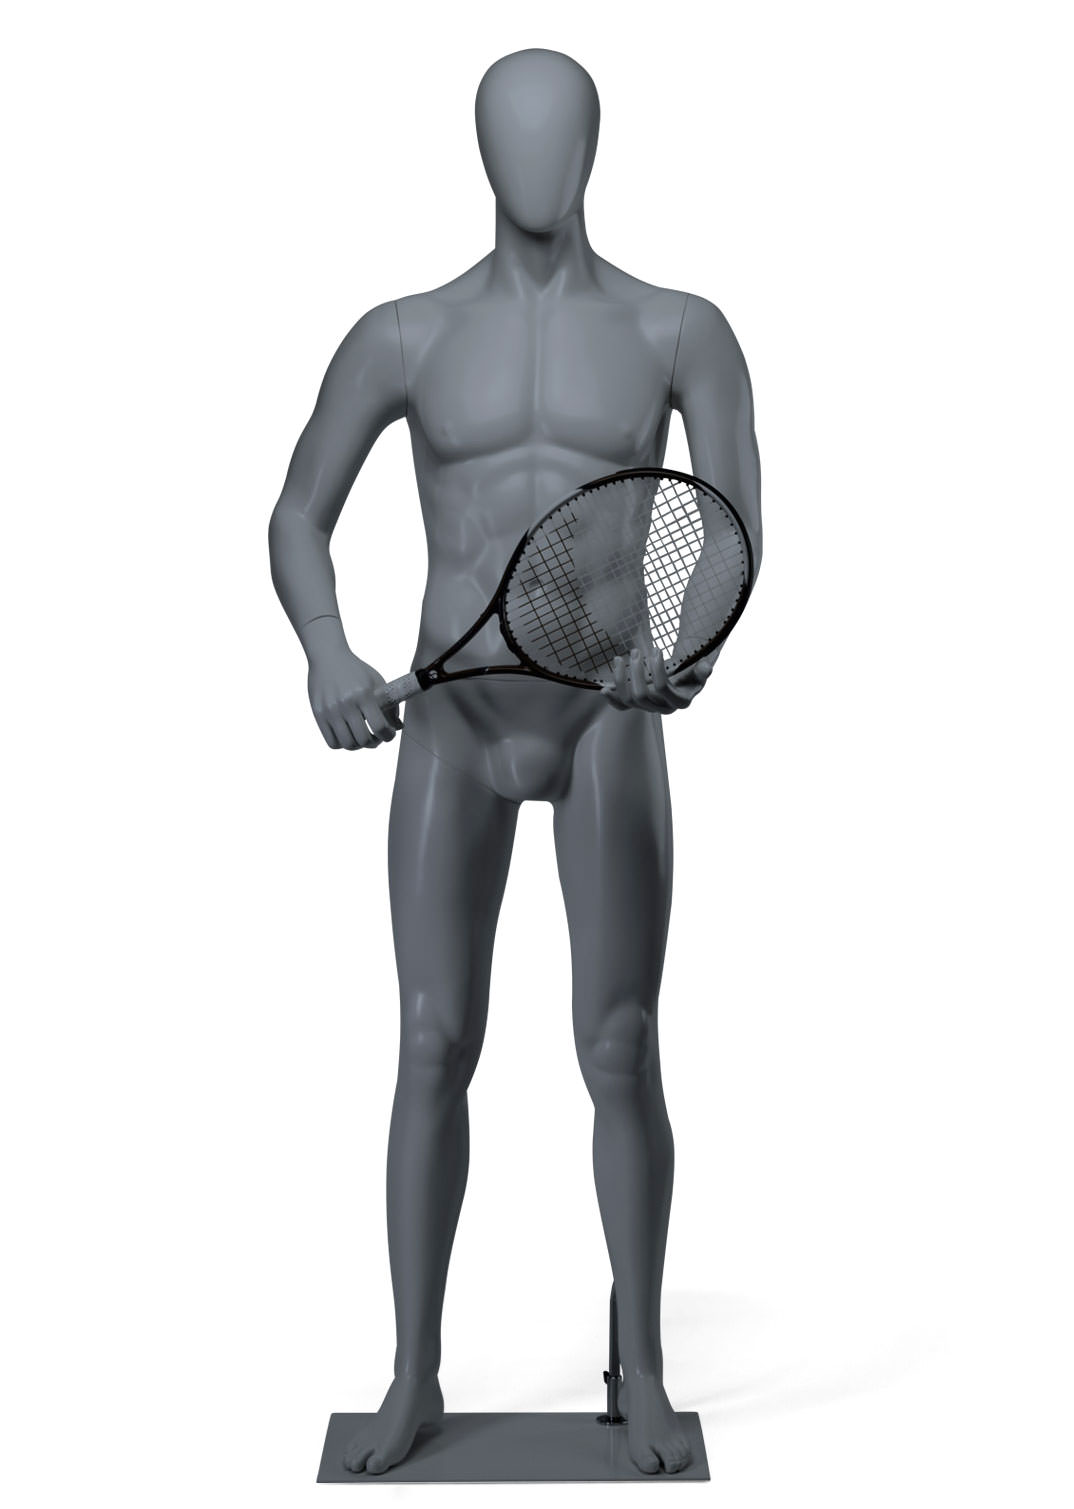 Male tennis / padel